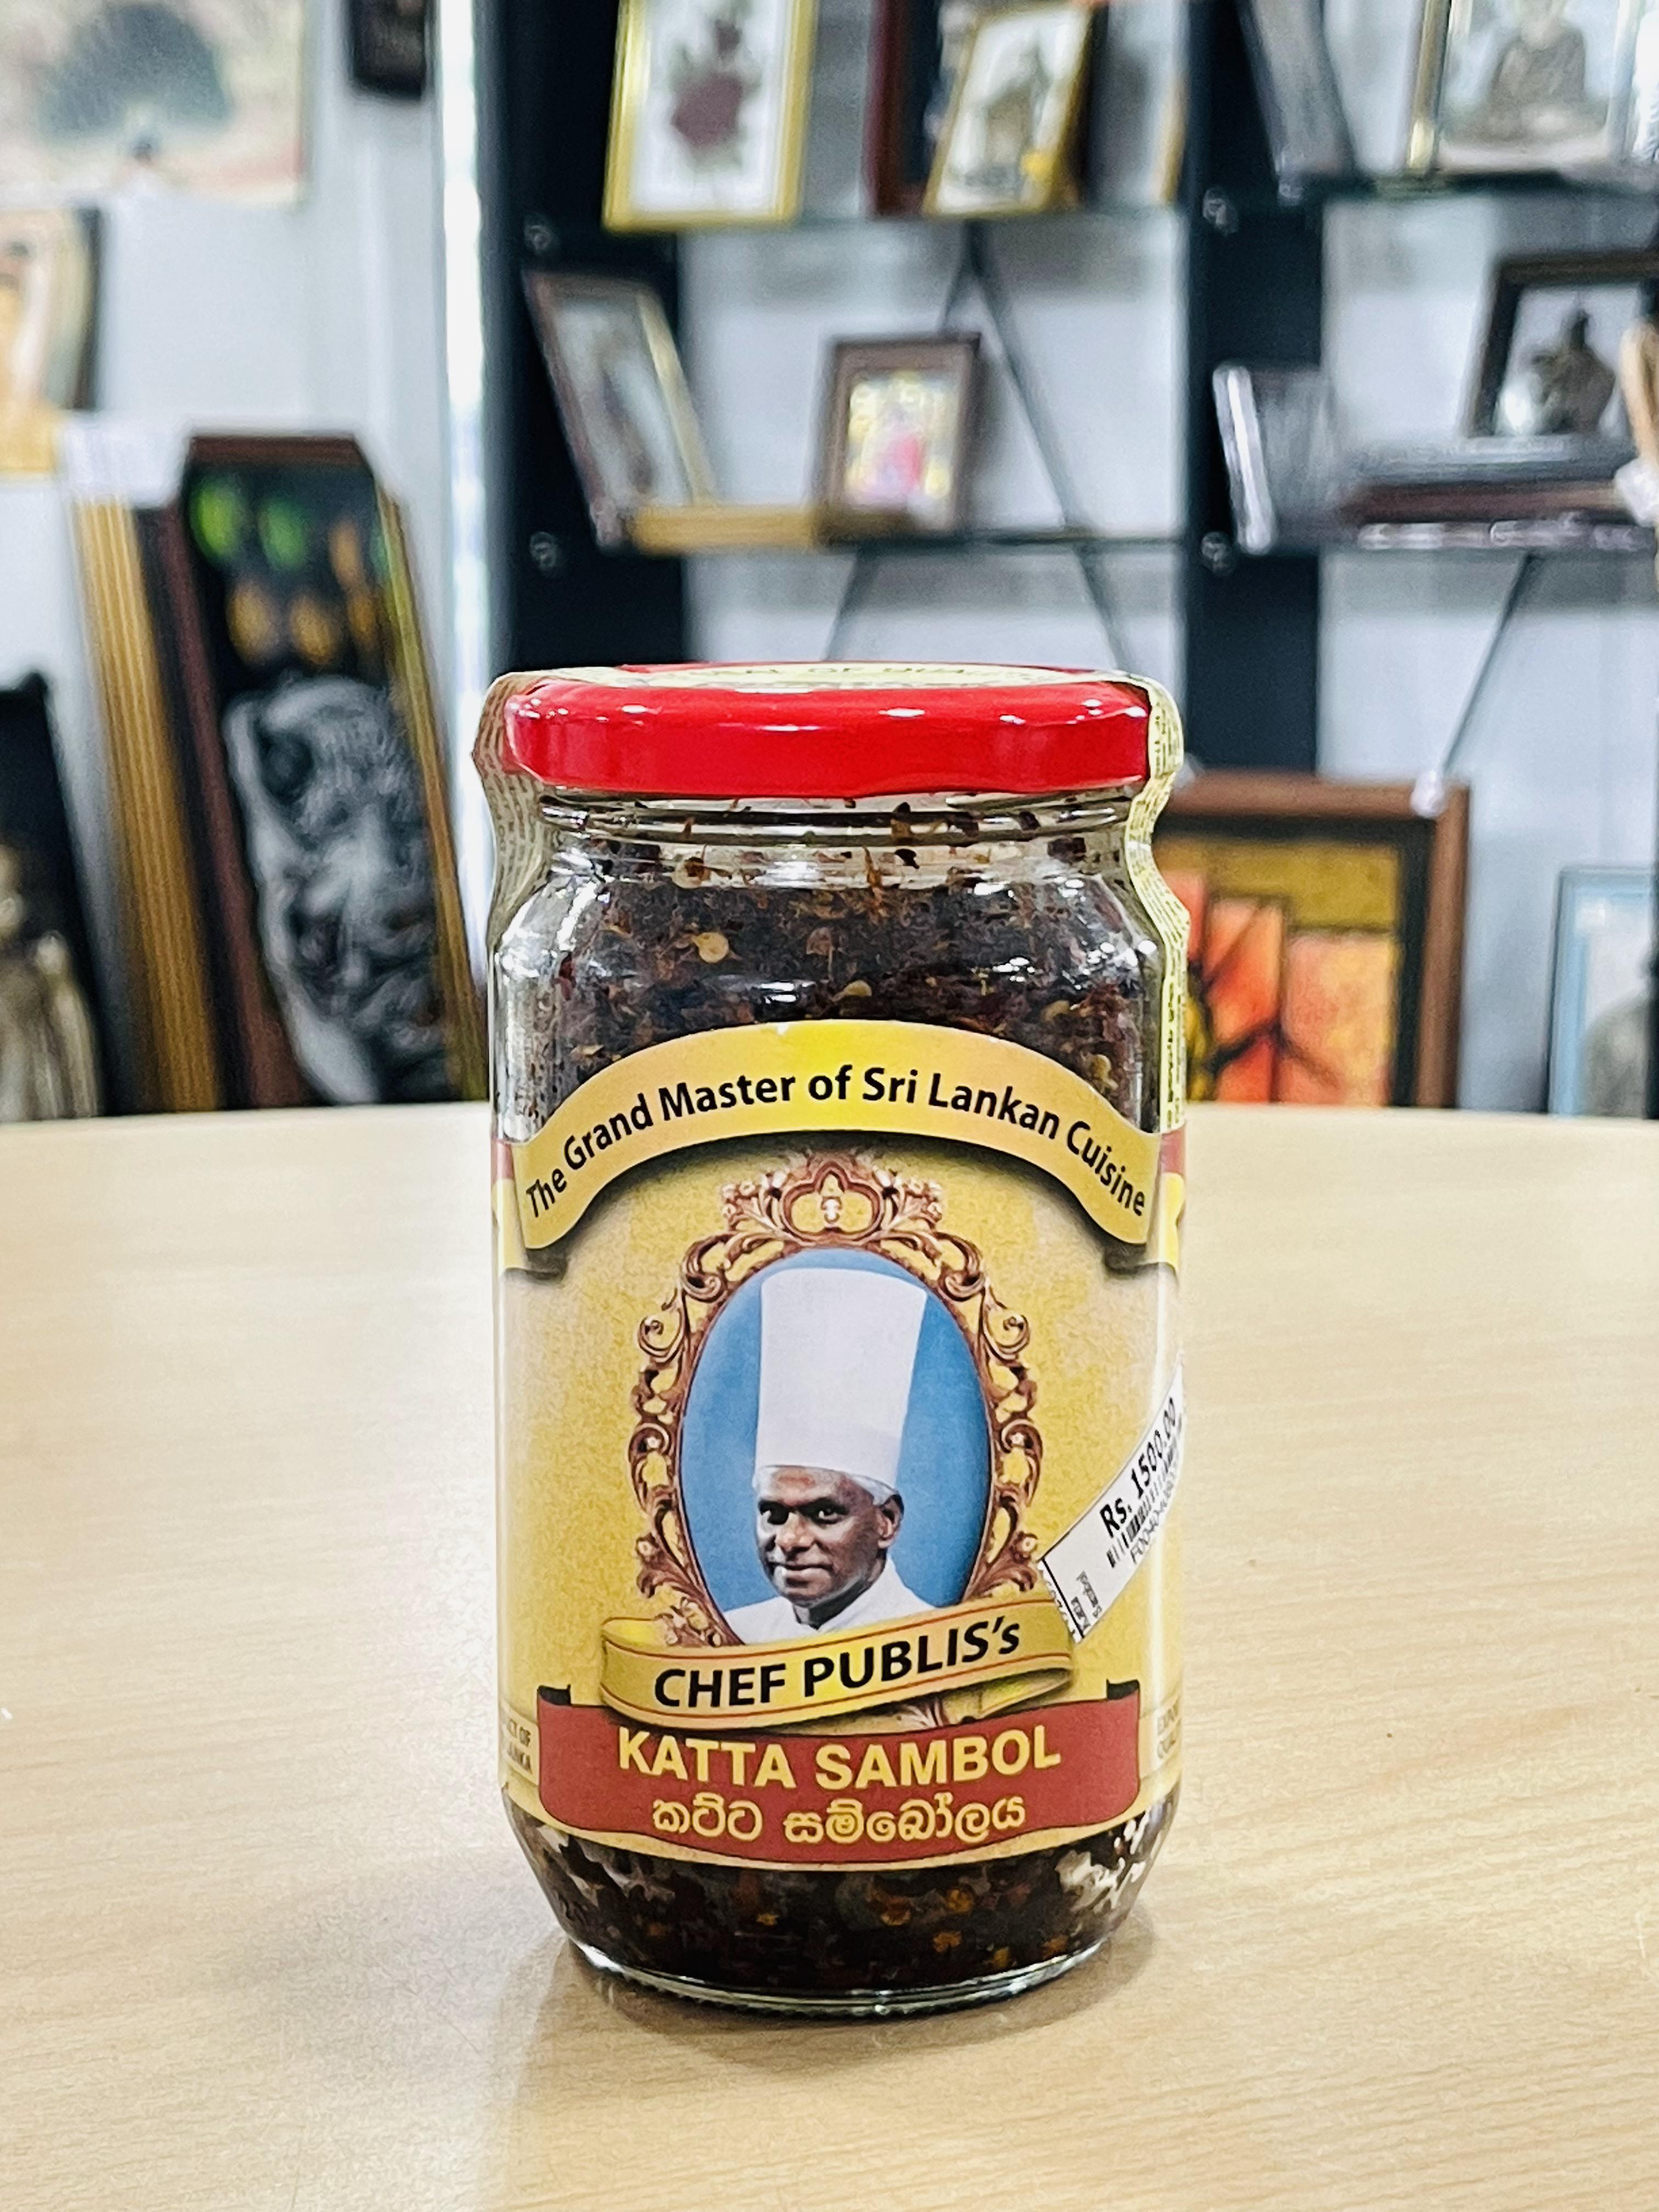 Chef Pabilis Katta Sambol